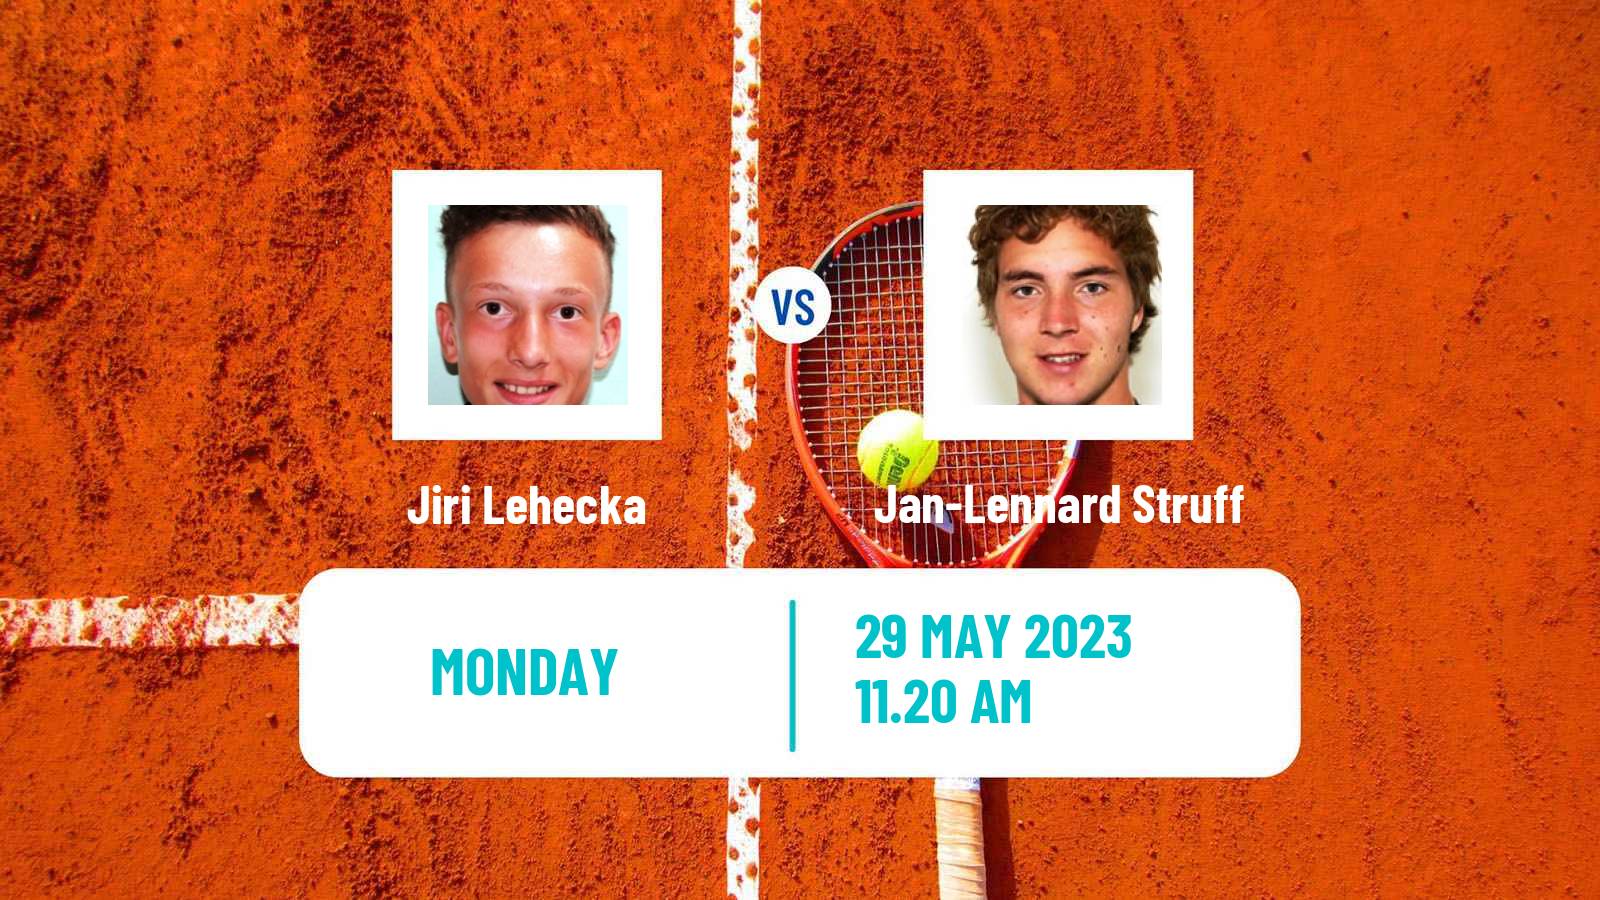 Tennis ATP Roland Garros Jiri Lehecka - Jan-Lennard Struff